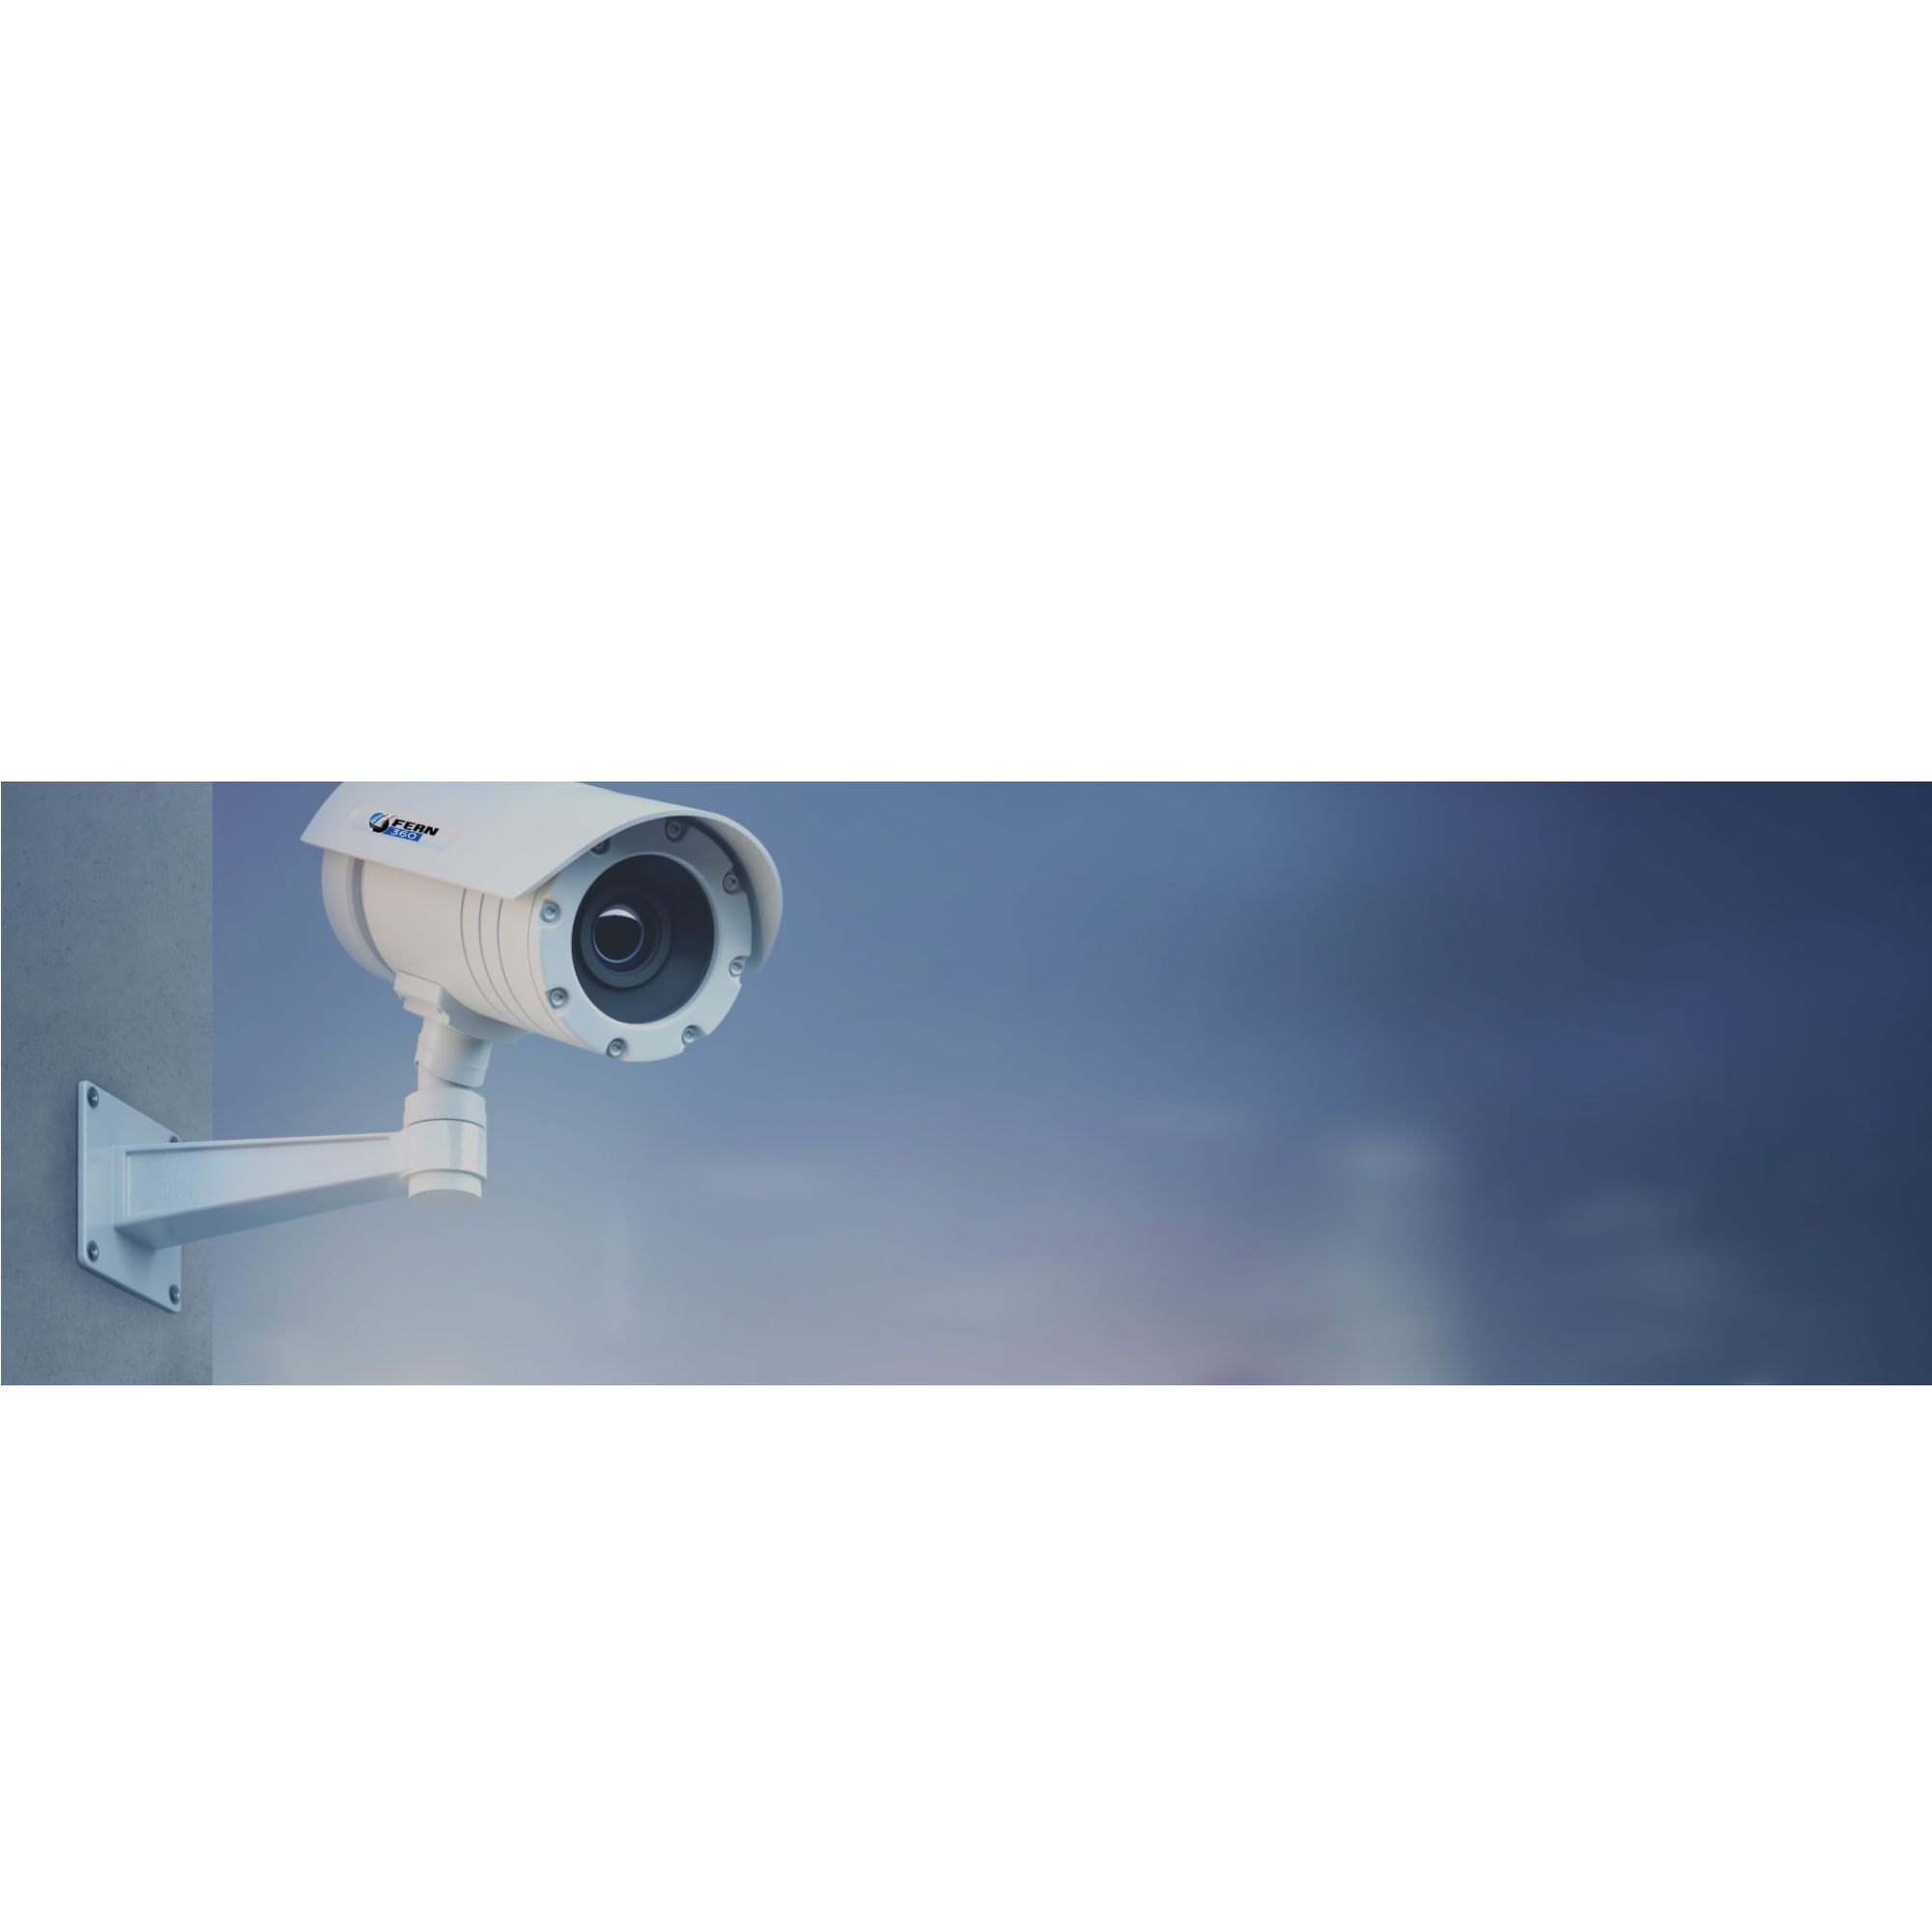 Surveillance - Simple Project Solutions